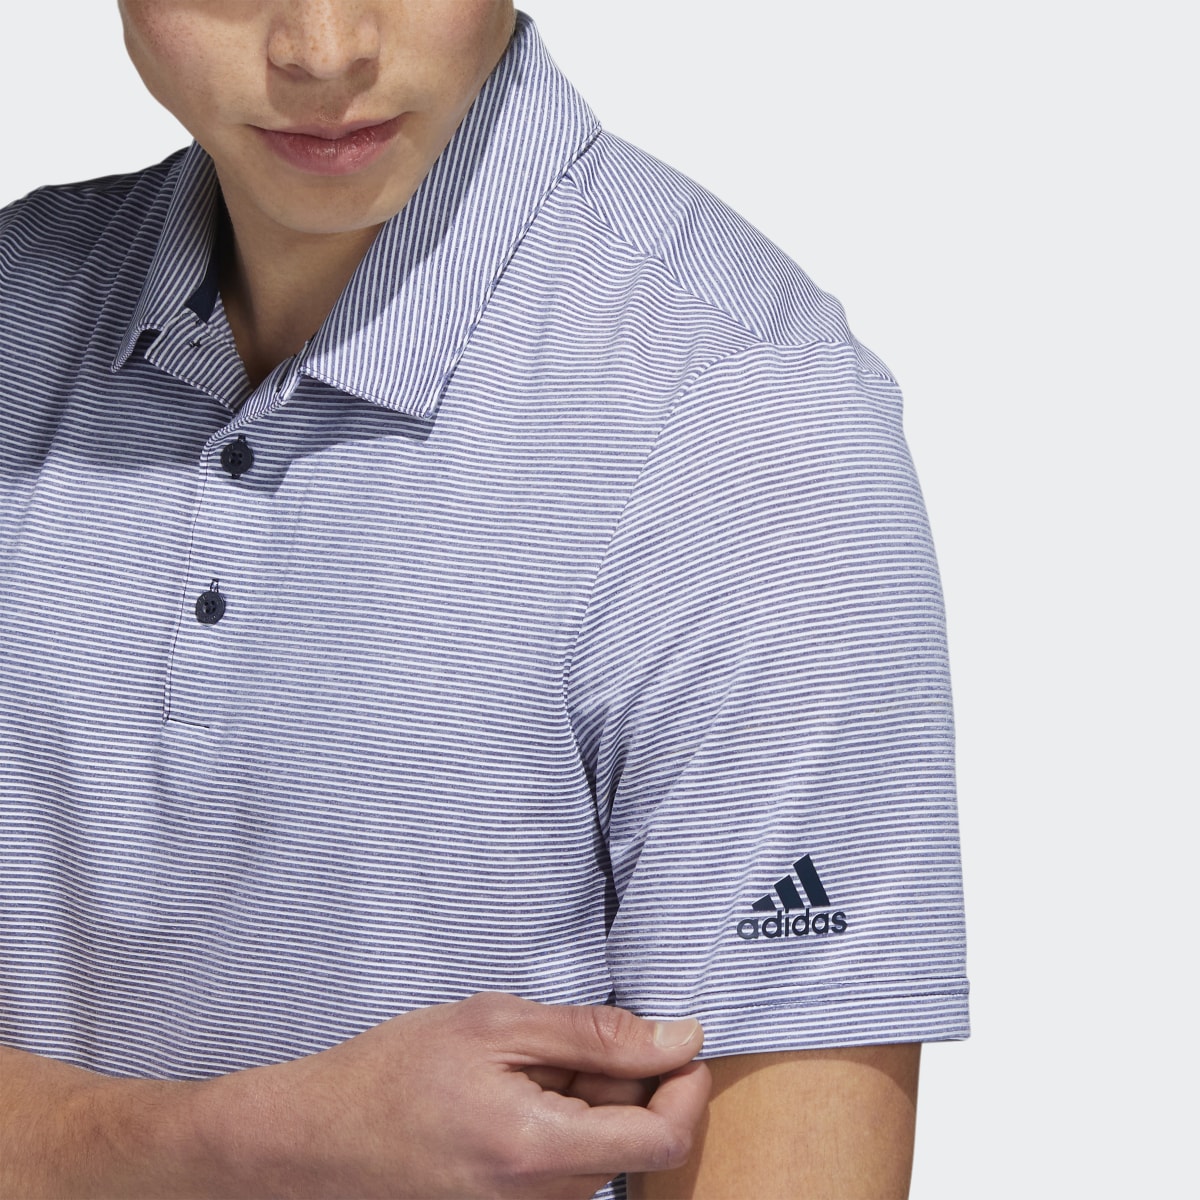 Adidas Ottoman Stripe Polo Shirt. 6